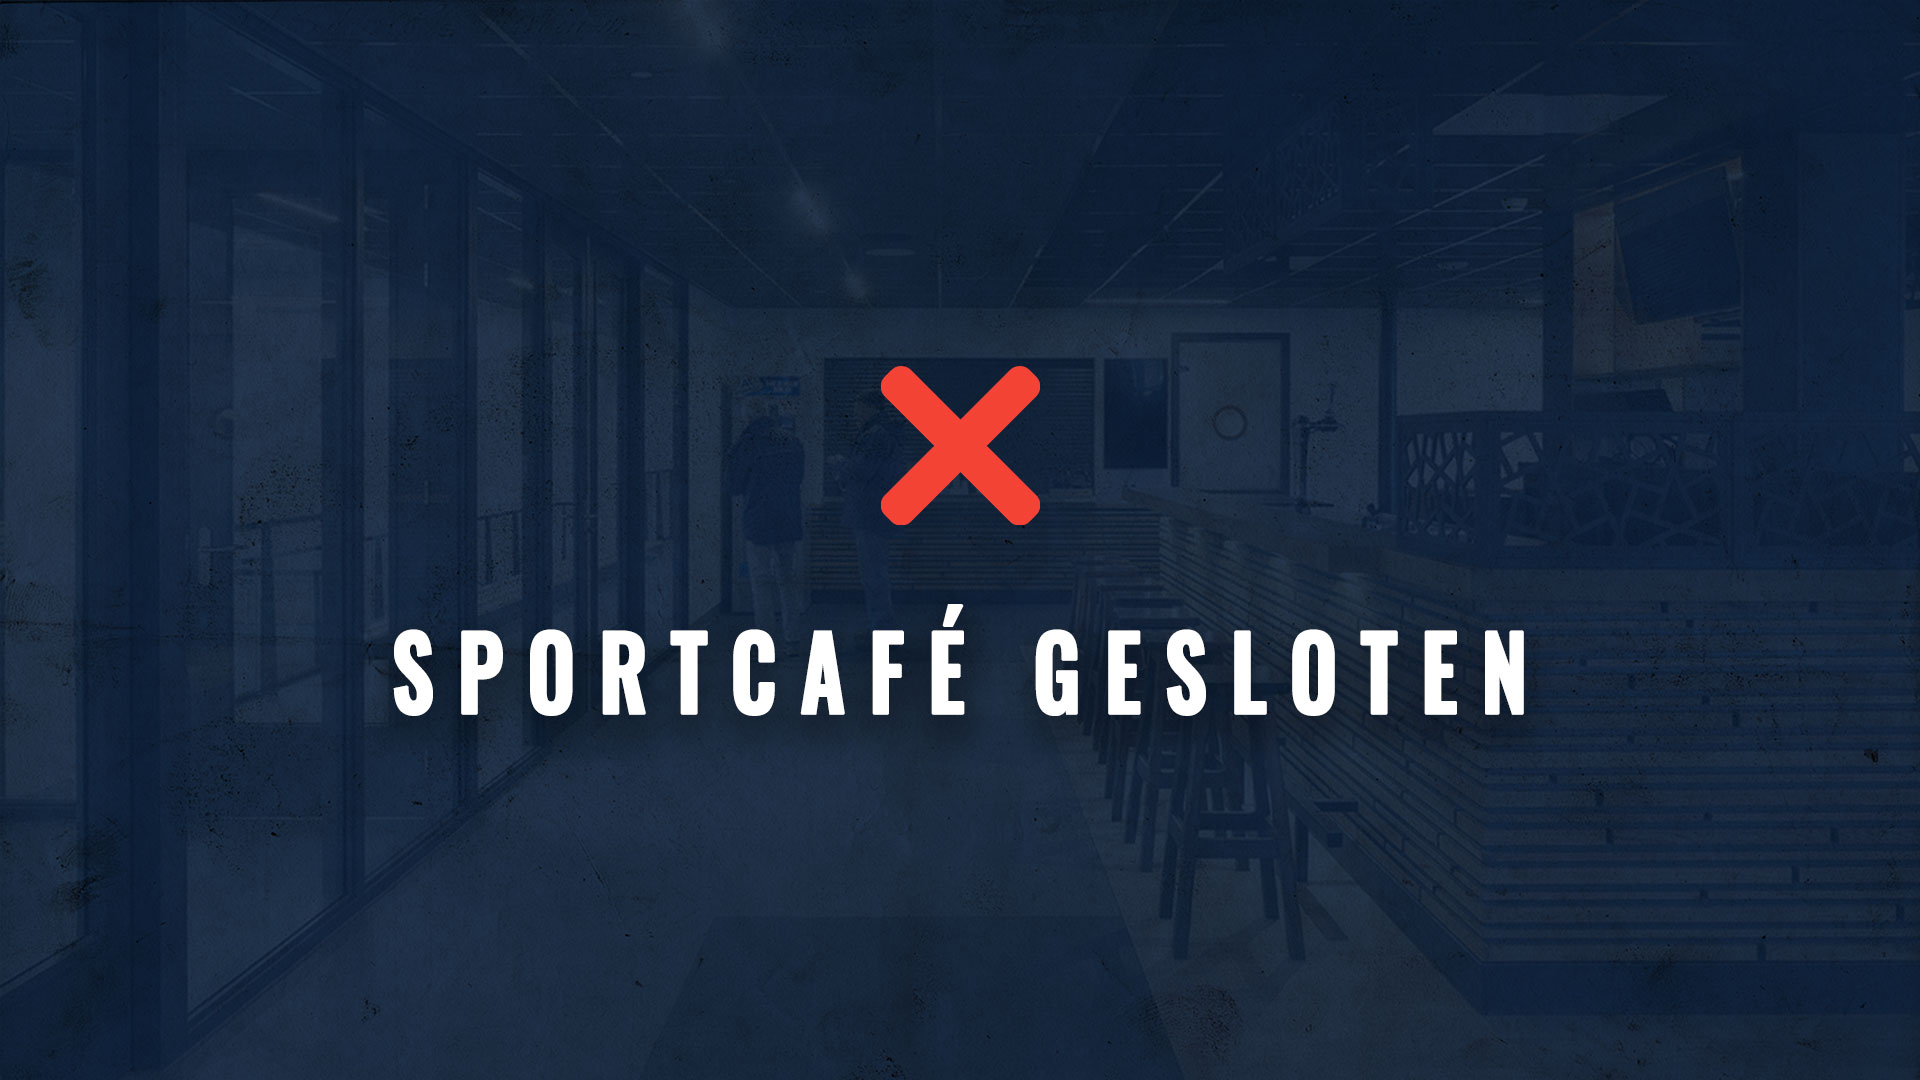 Sportcafé gesloten in winterperiode